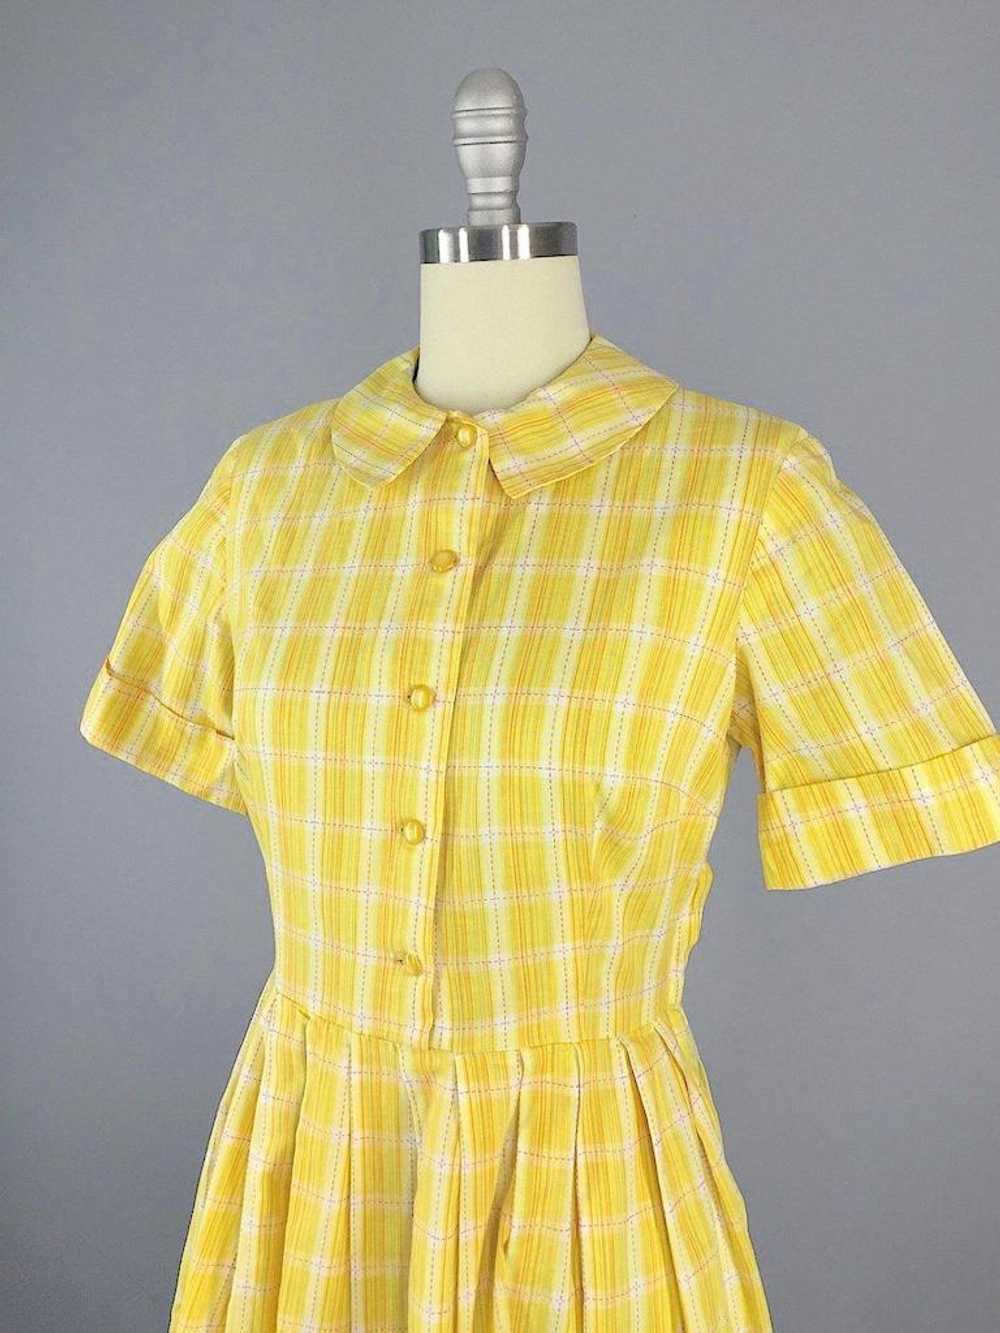 Vintage Yellow Plaid Cotton Dress - image 2